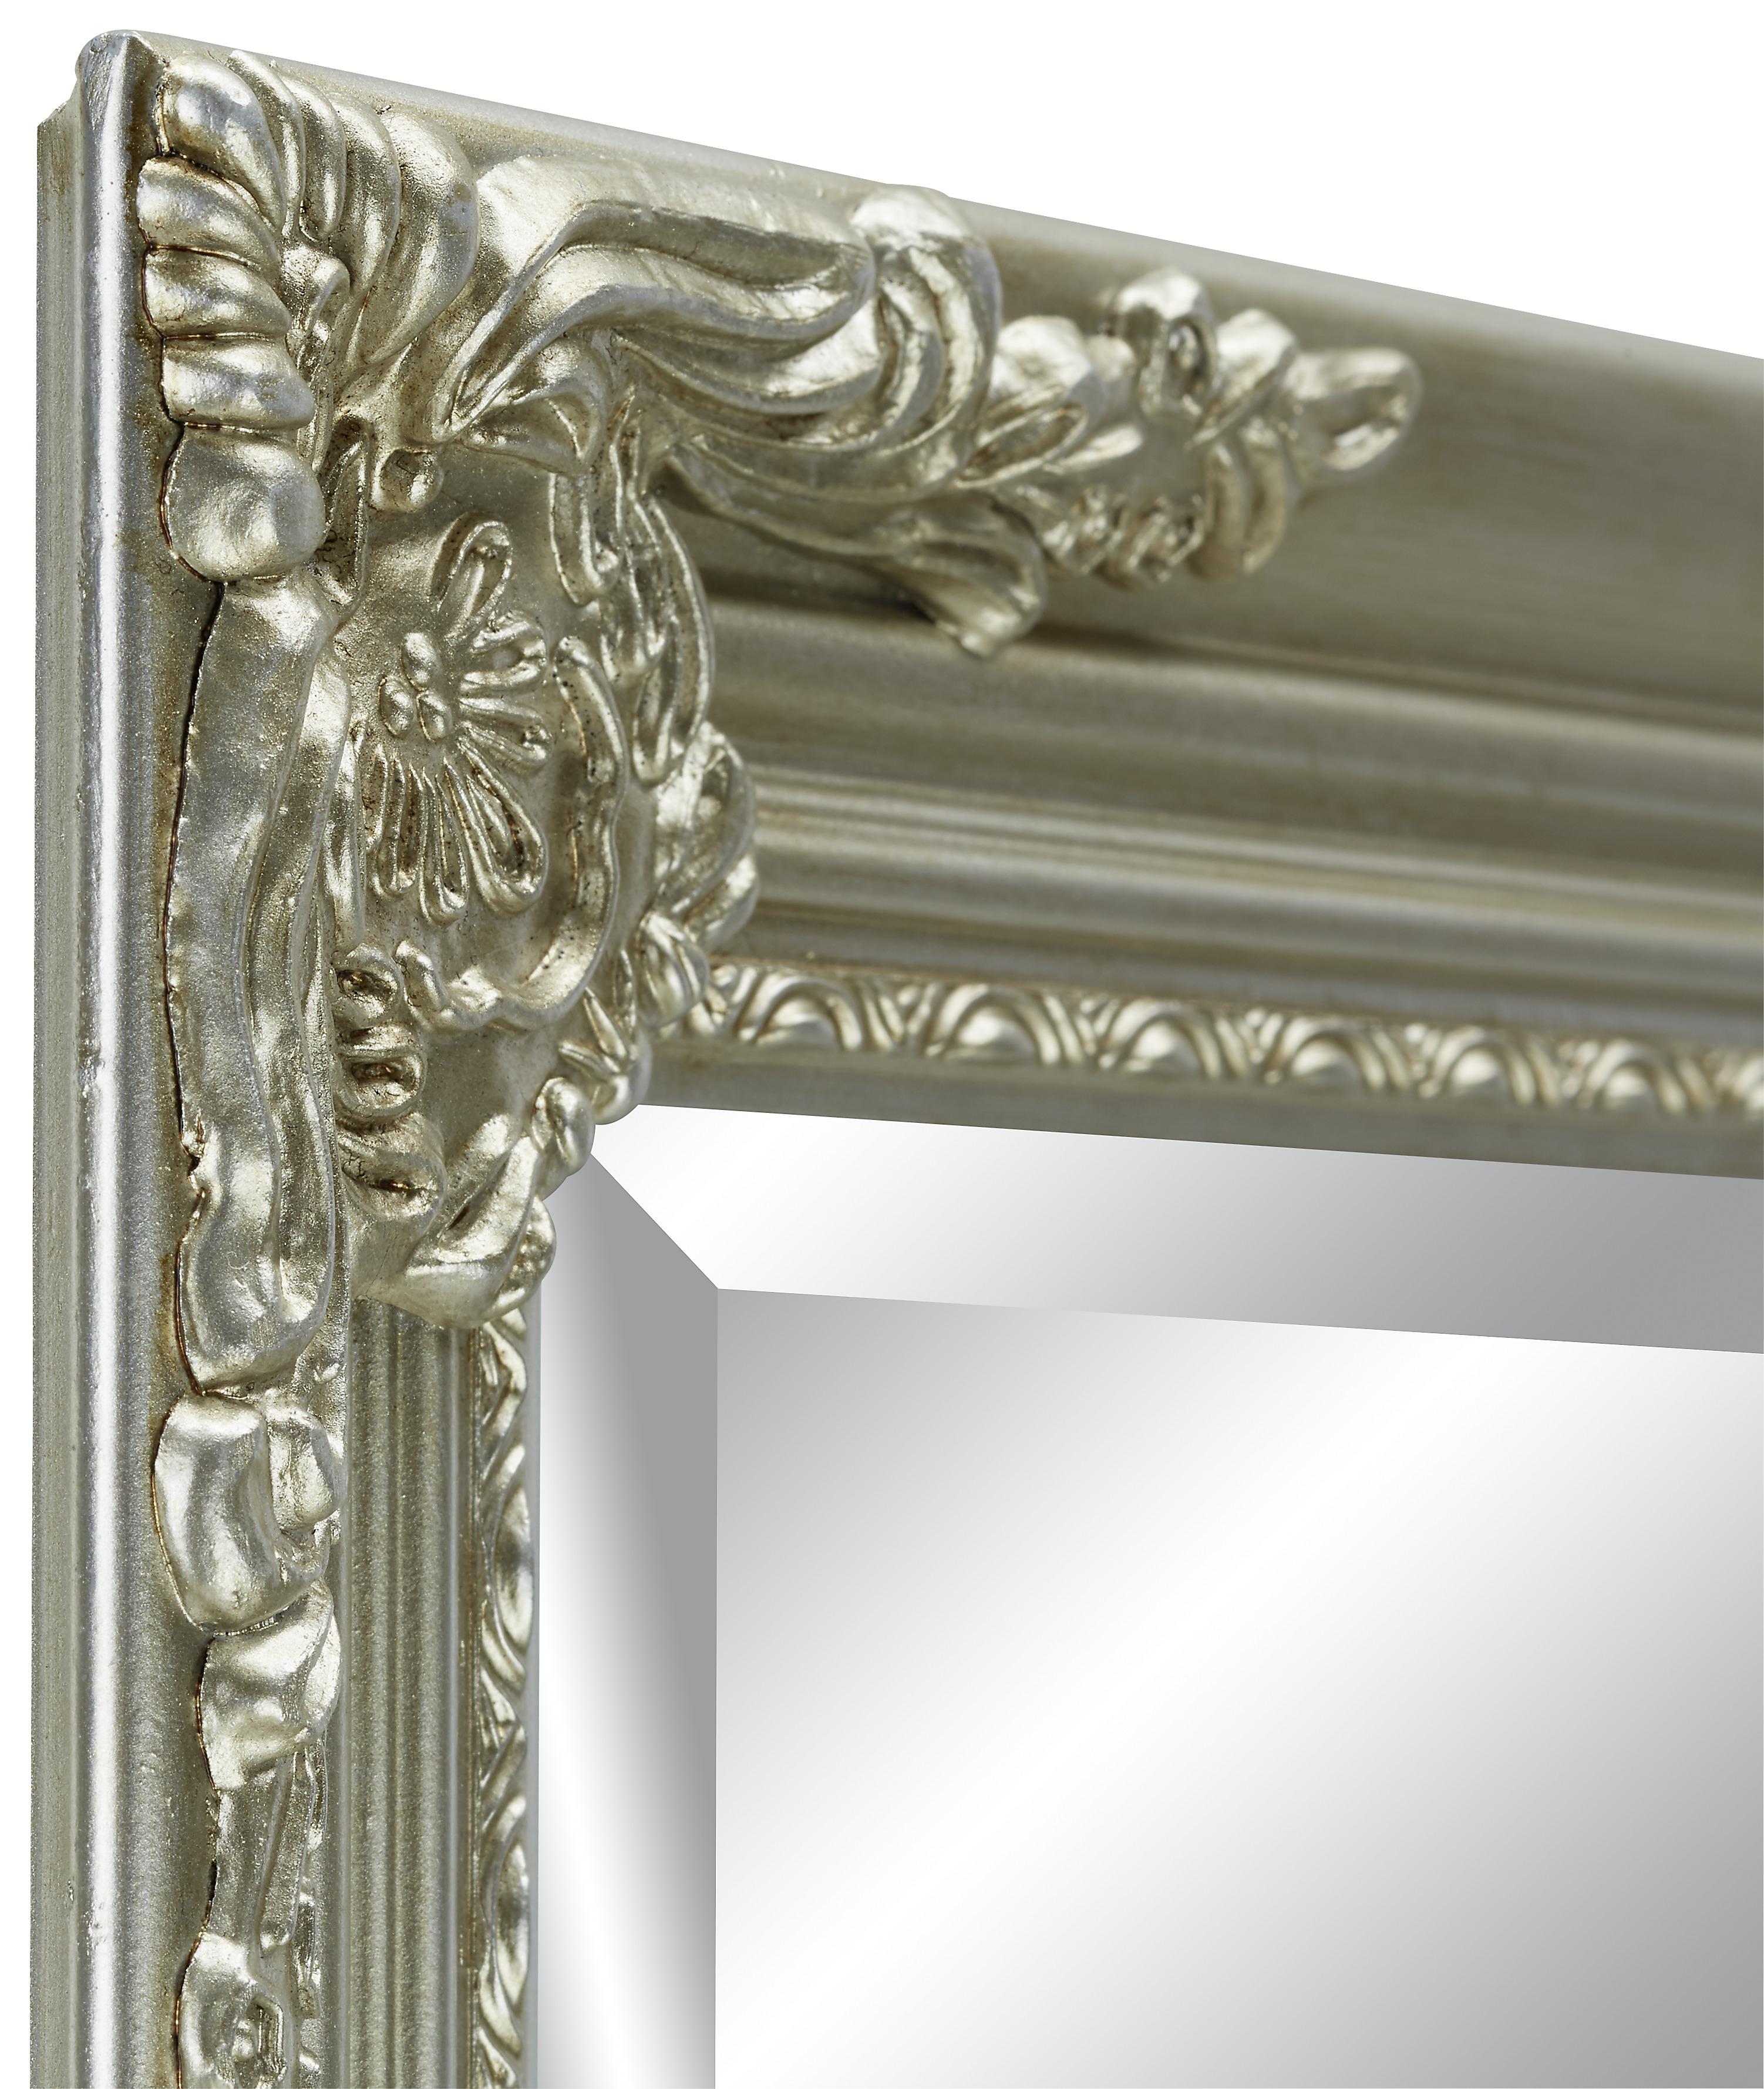 Ogledalo Zidno Barock - srebrne boje, Romantik / Landhaus, staklo/drvo (70/90/3cm) - Modern Living